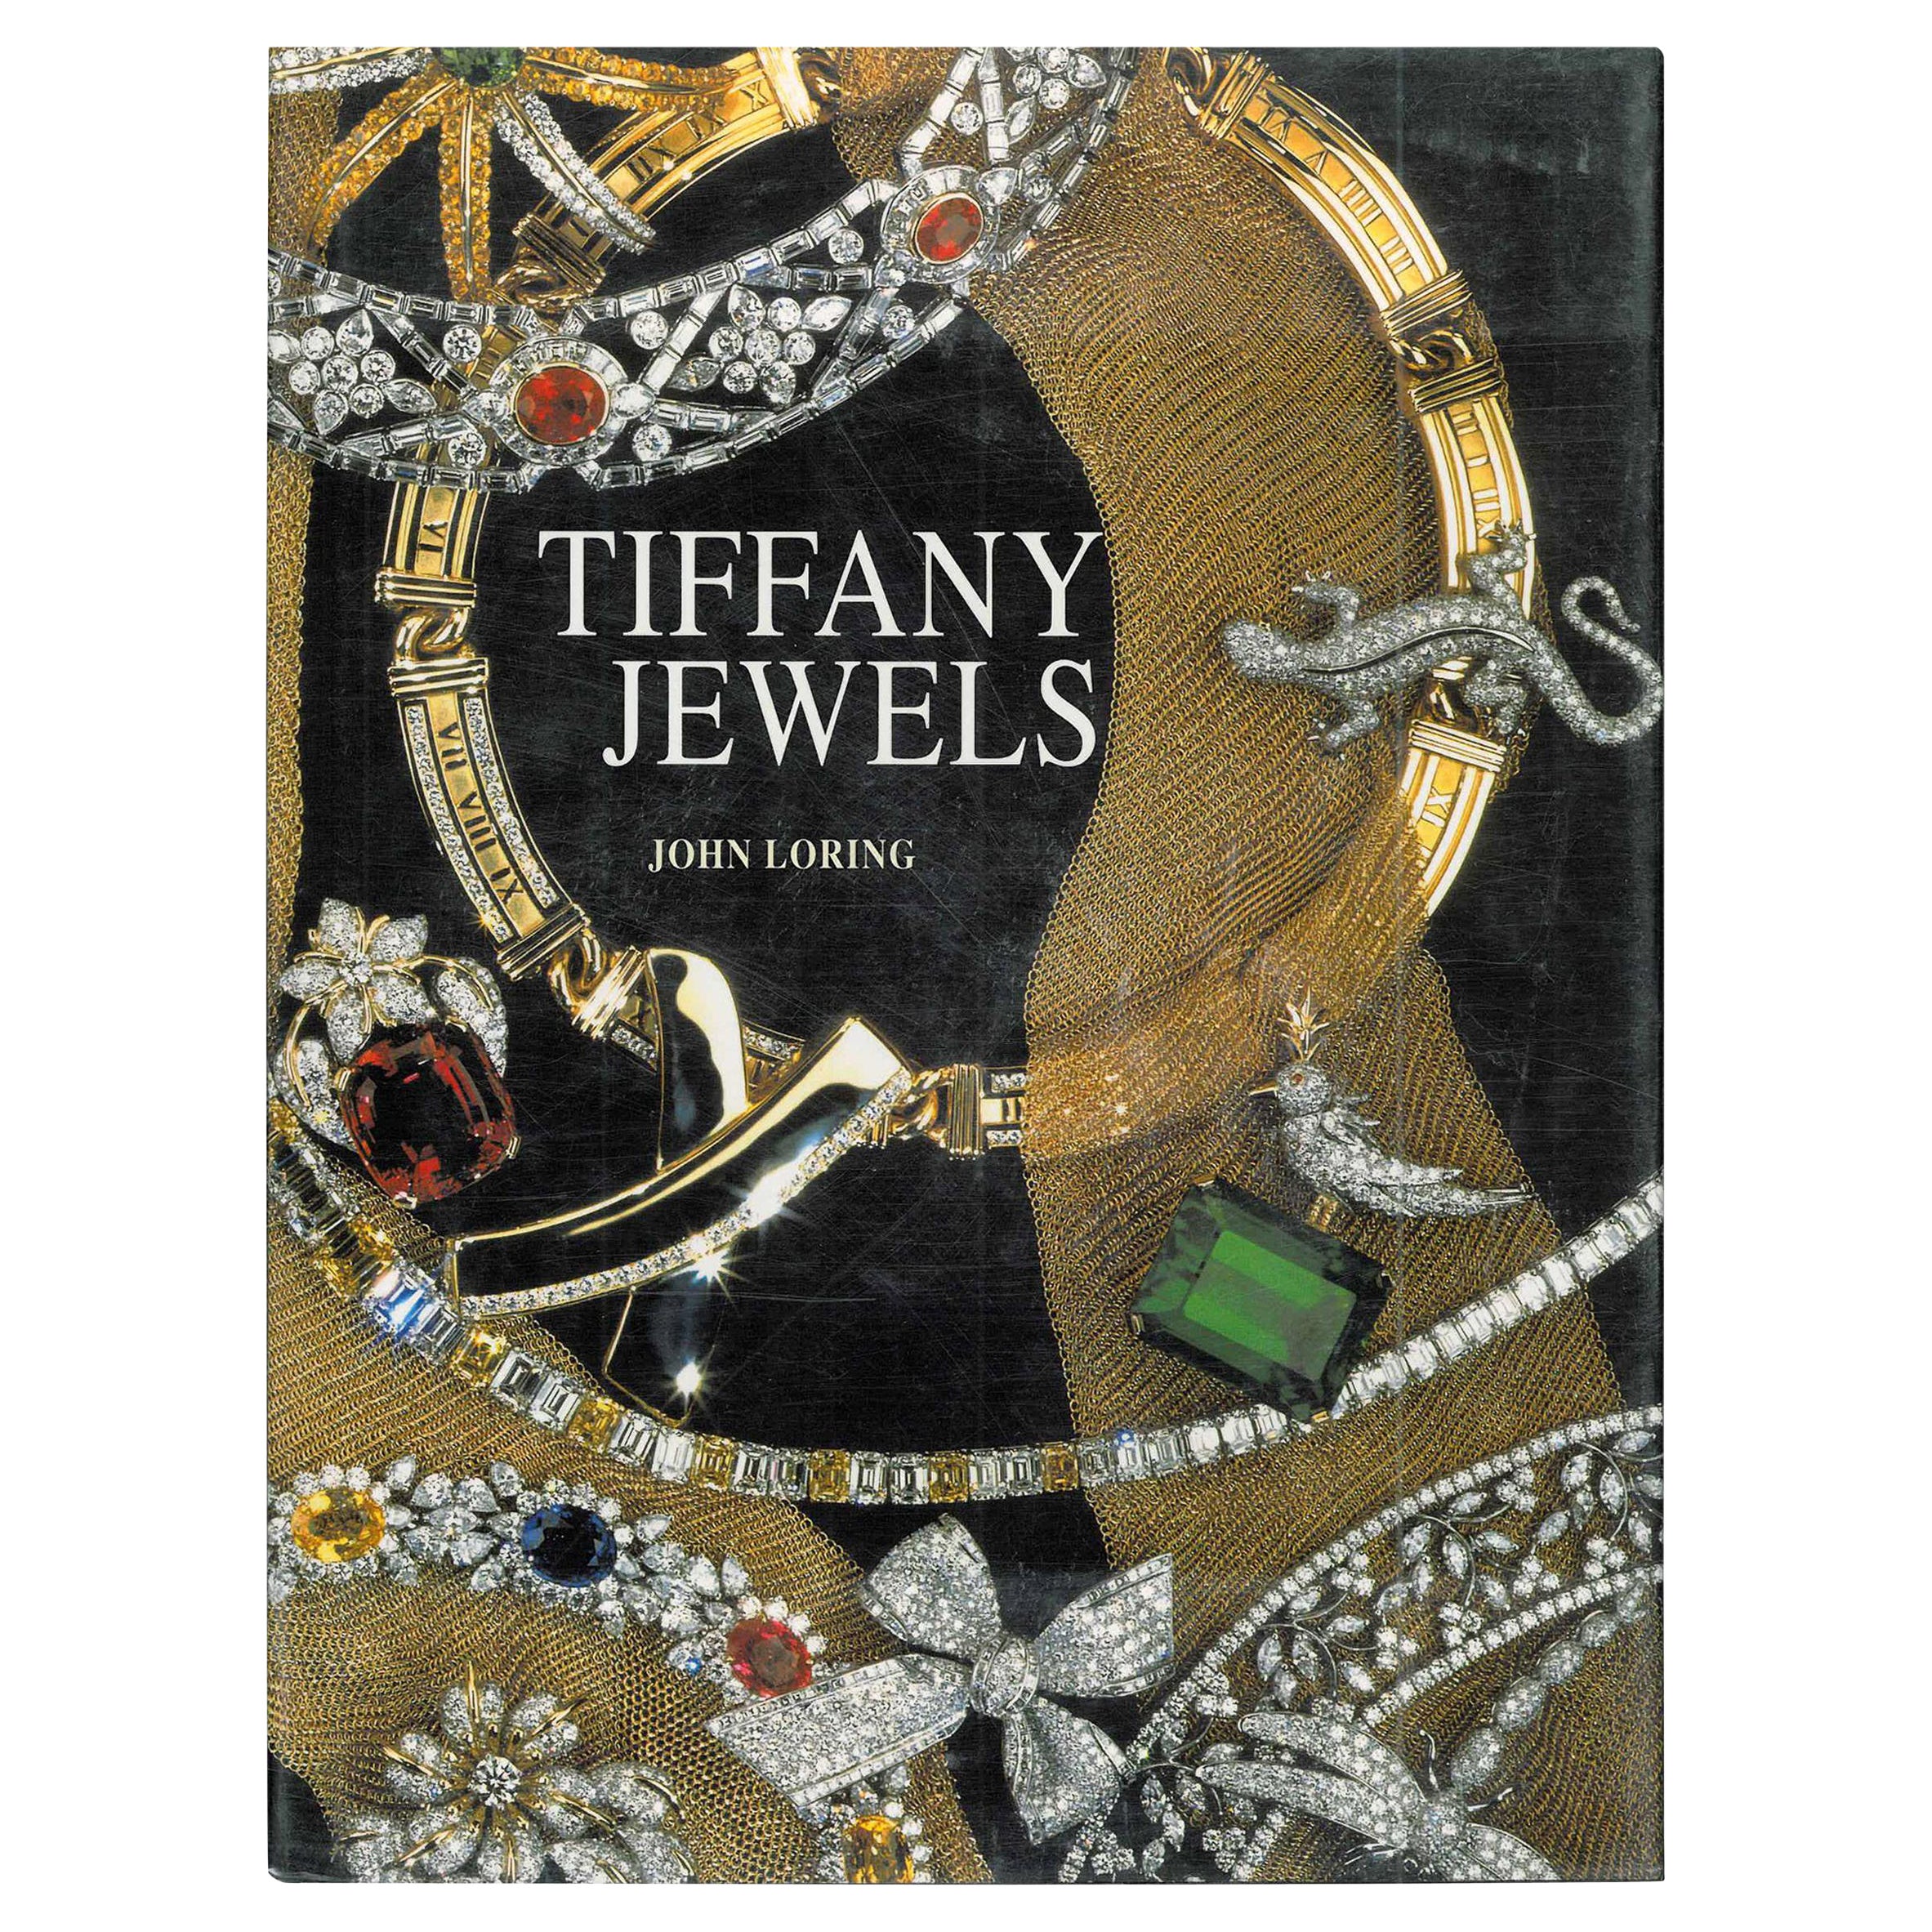 Tiffany Jewels By John Lorina (Book)